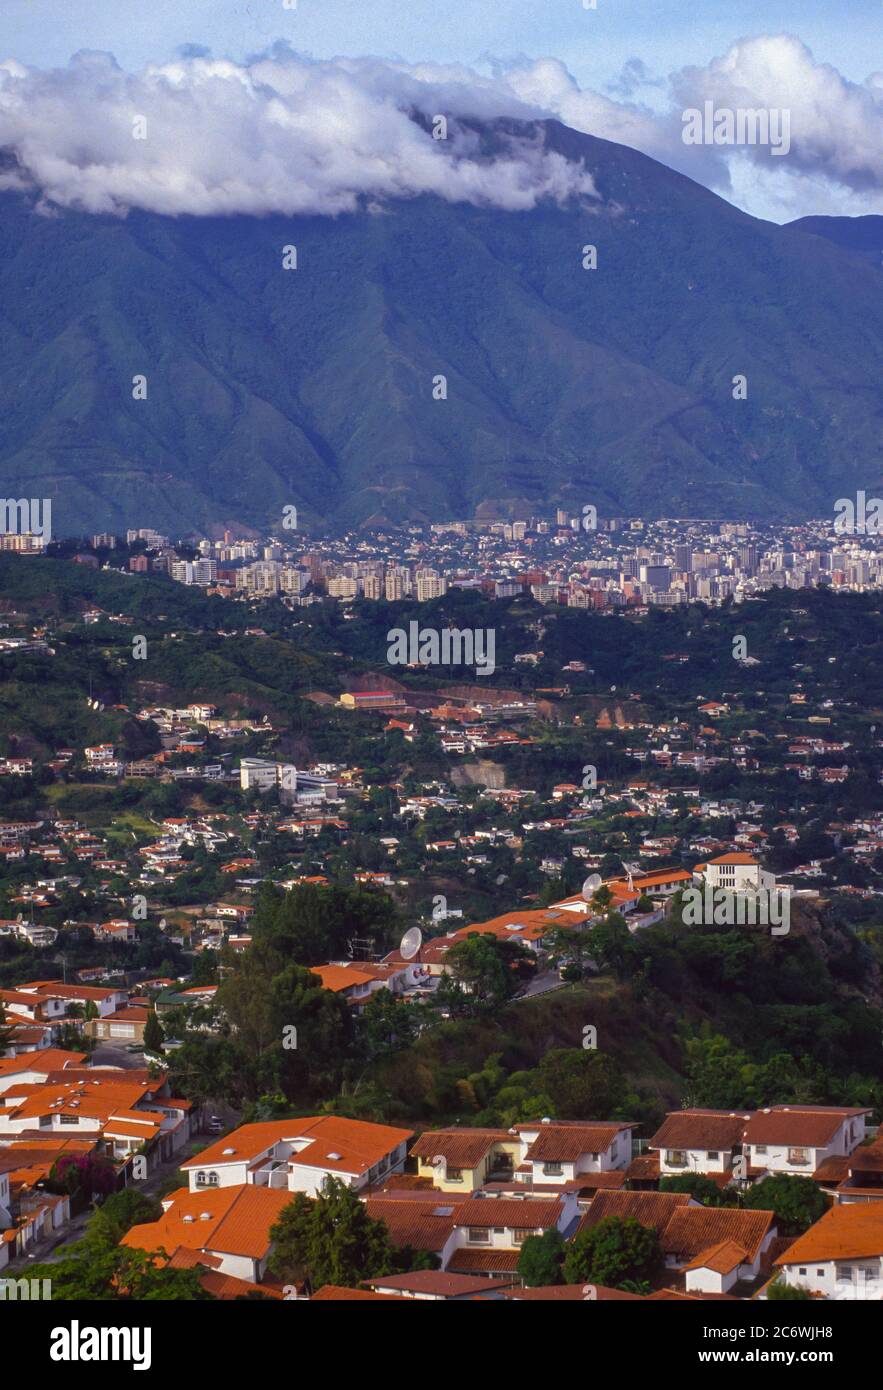 CARACAS, VENEZUELA - Dowtown Caracas urban landscape with El Avila mountain in distance. Stock Photo